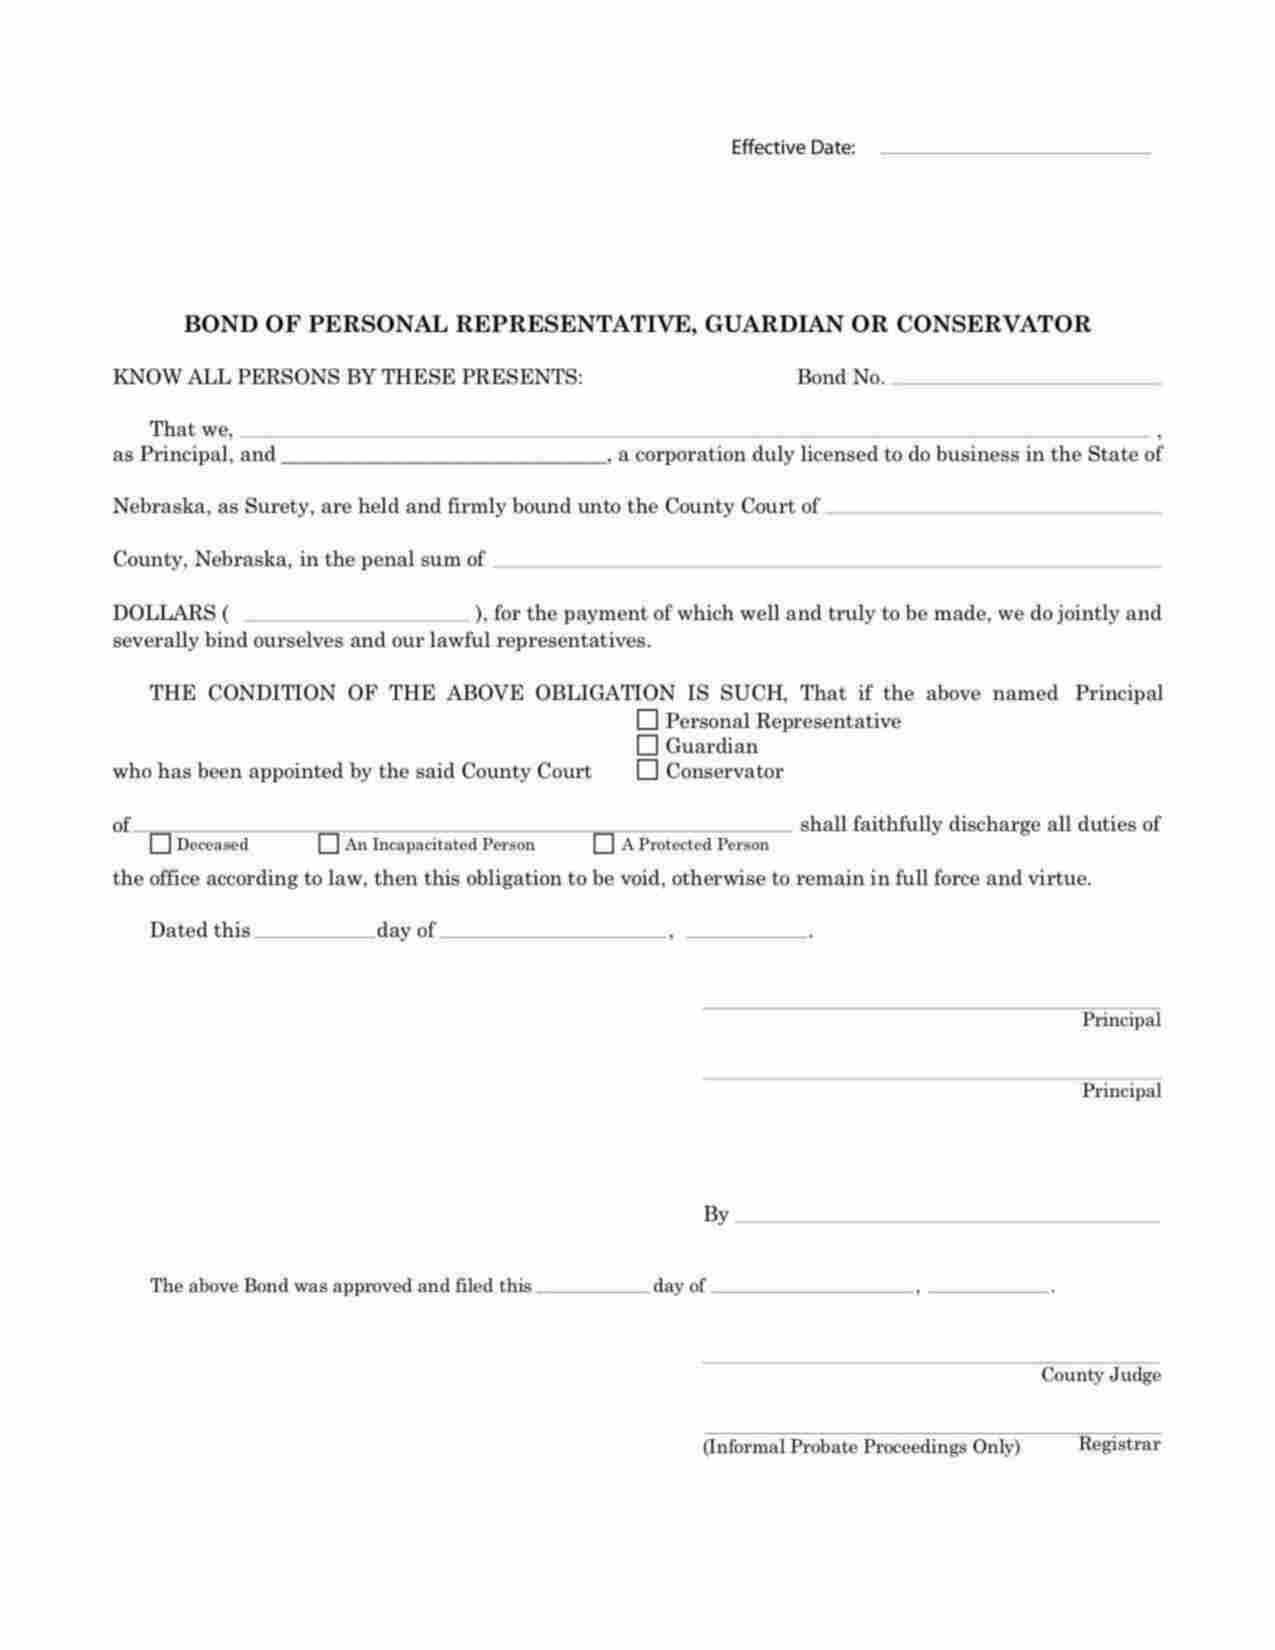 Nebraska Conservator - Incompetent Bond Form